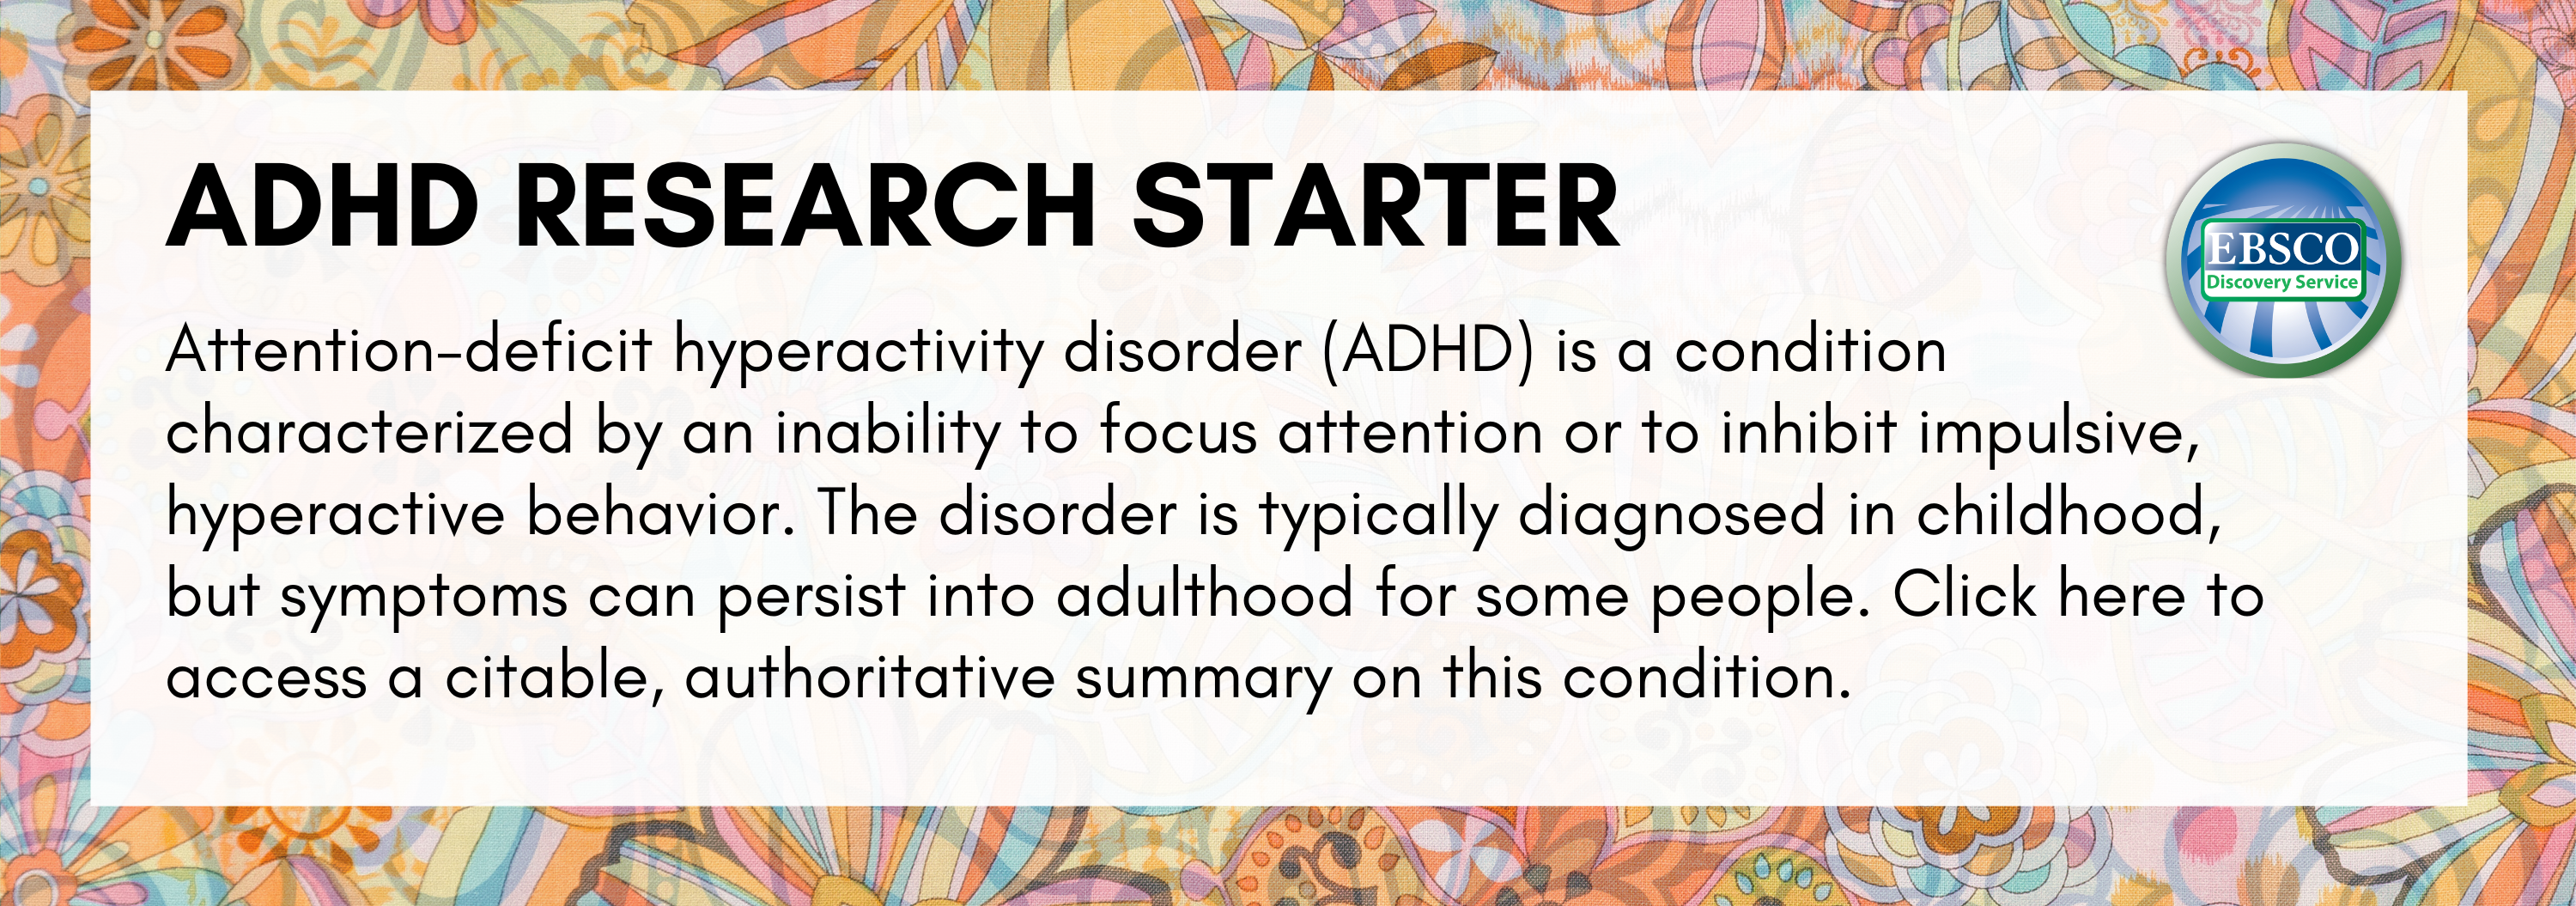 ADHD Research Starter